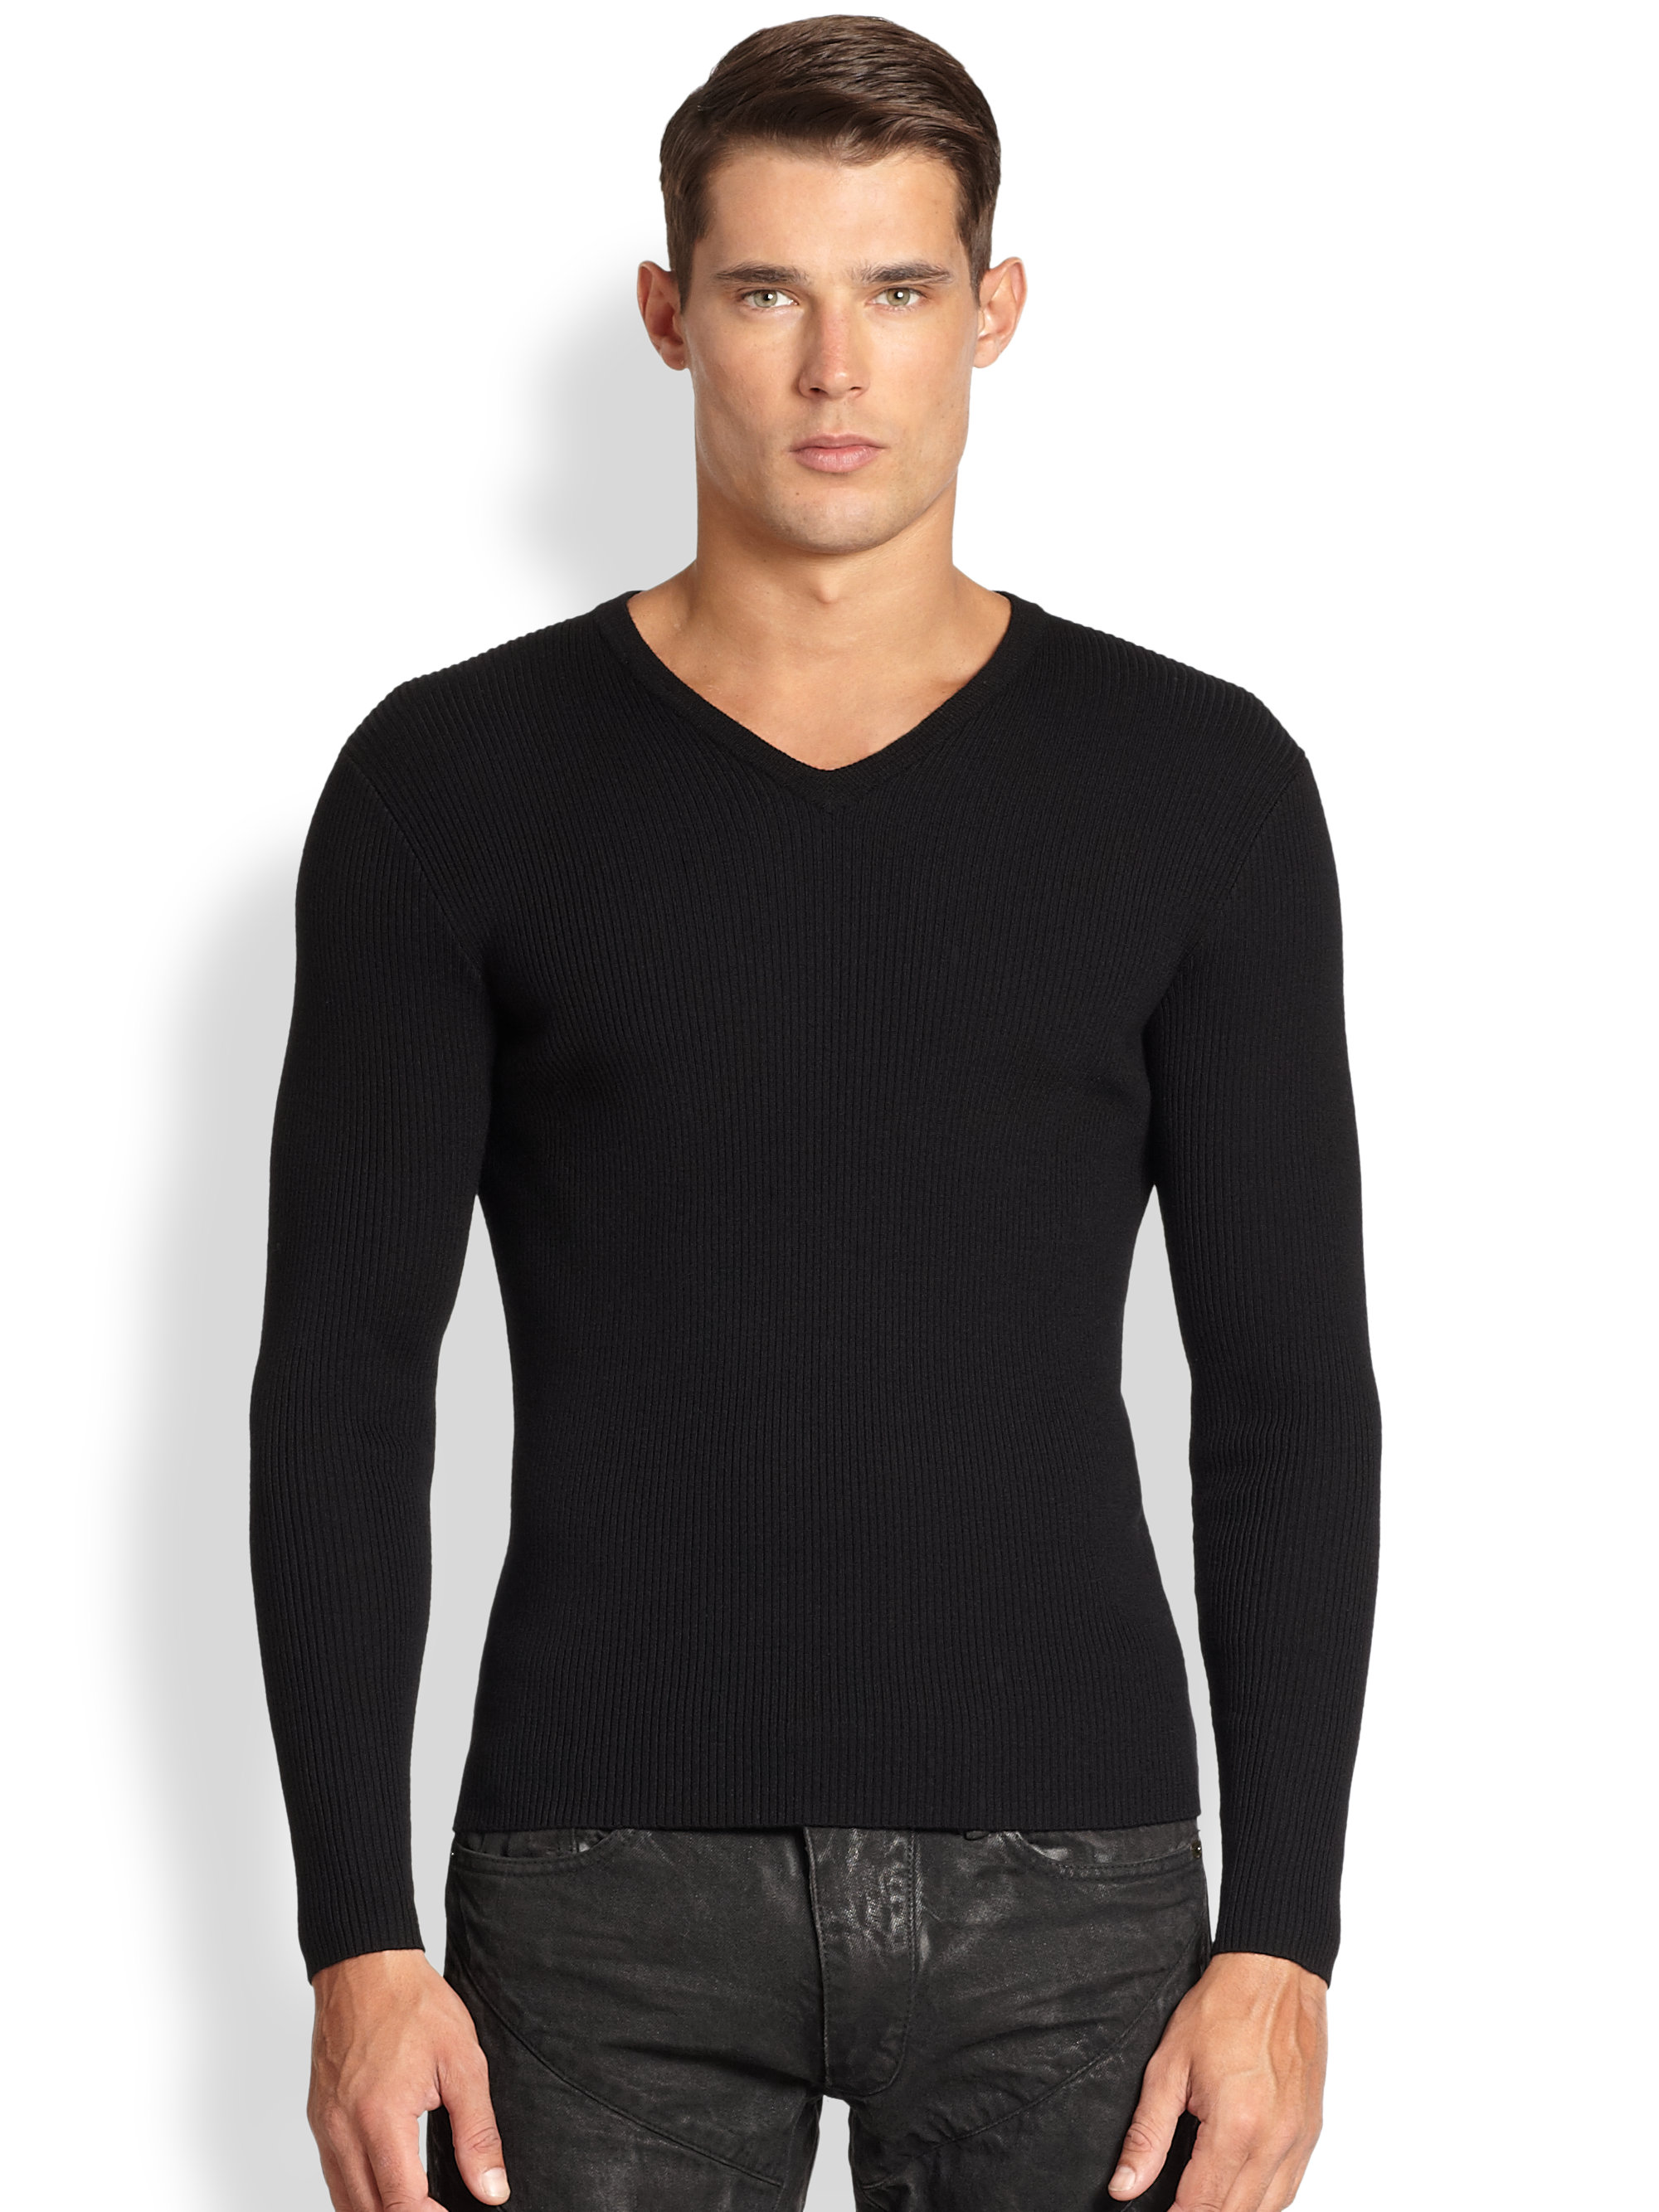 Lyst - Ralph lauren black label Ribbed Merino Wool V-neck Sweater in ...